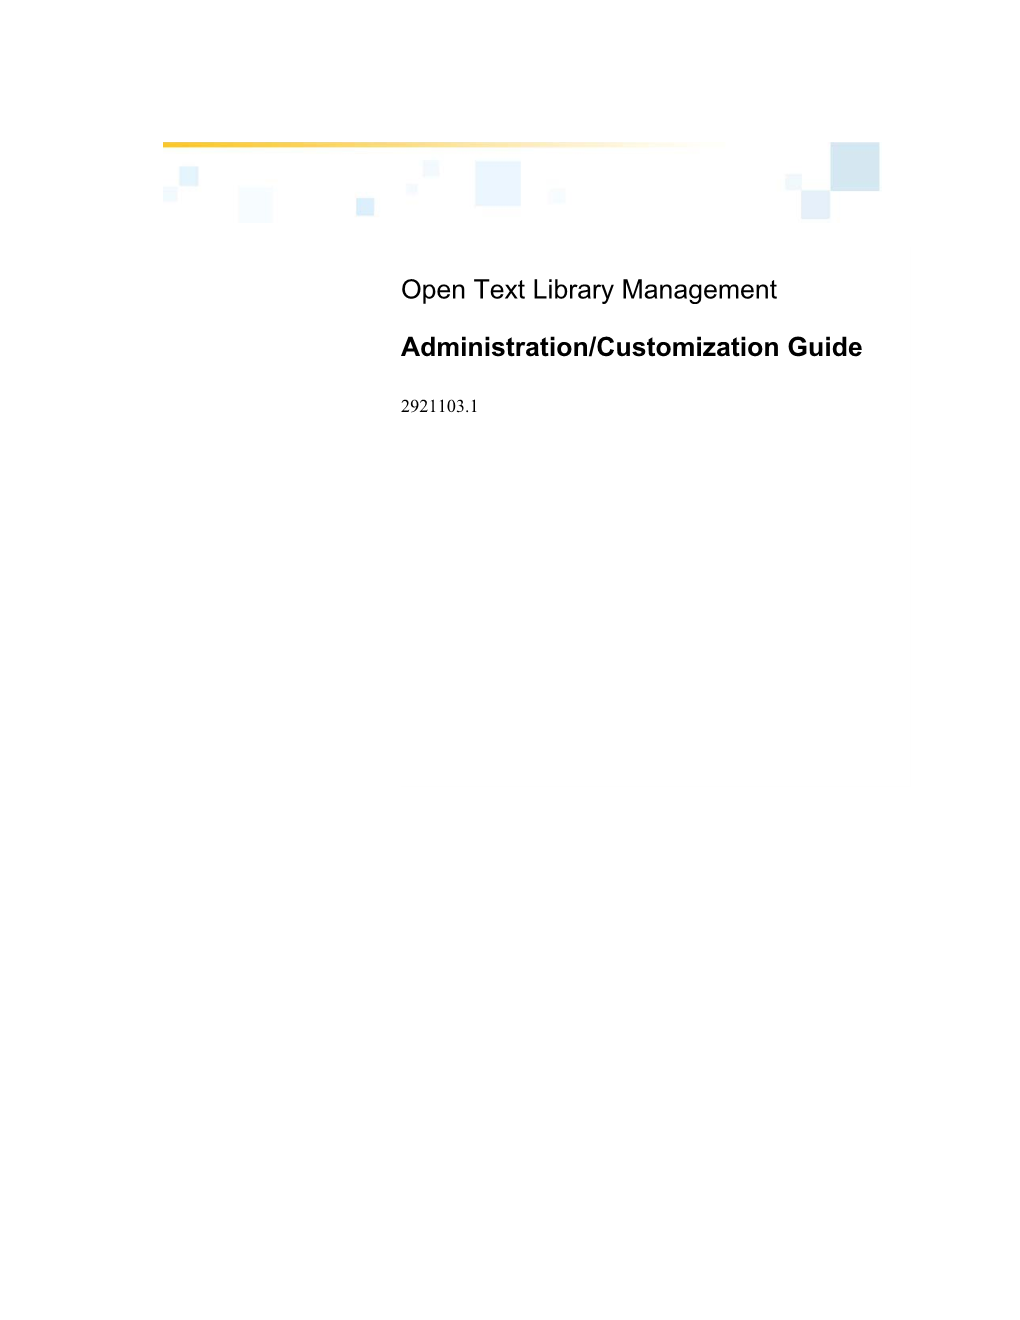 Techlib Administration Customization Guide